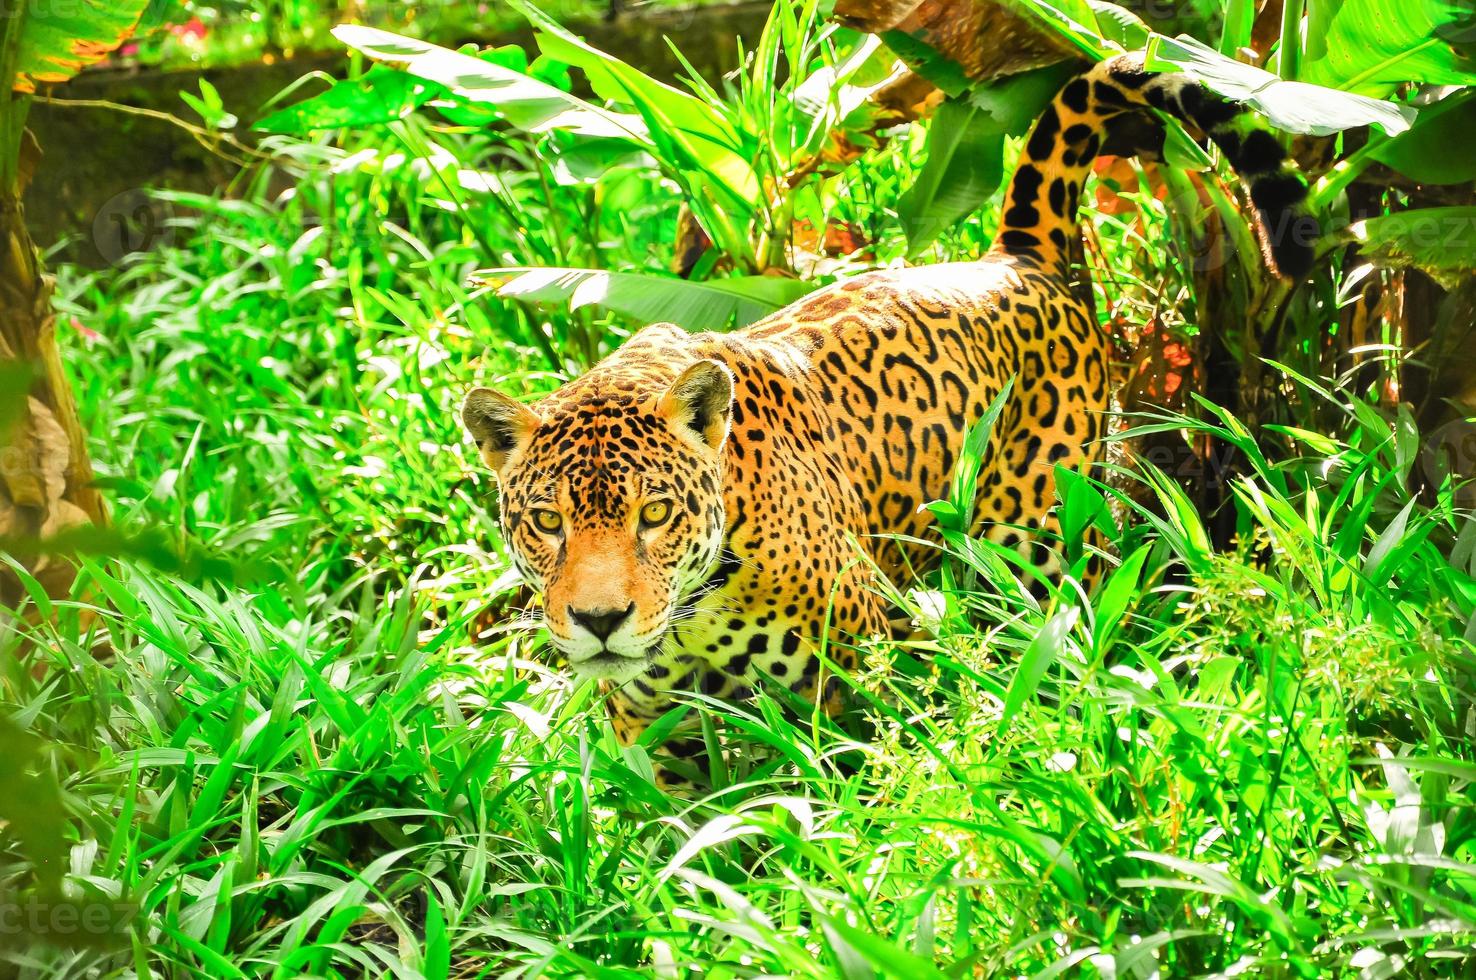 A jaguar in the grass photo